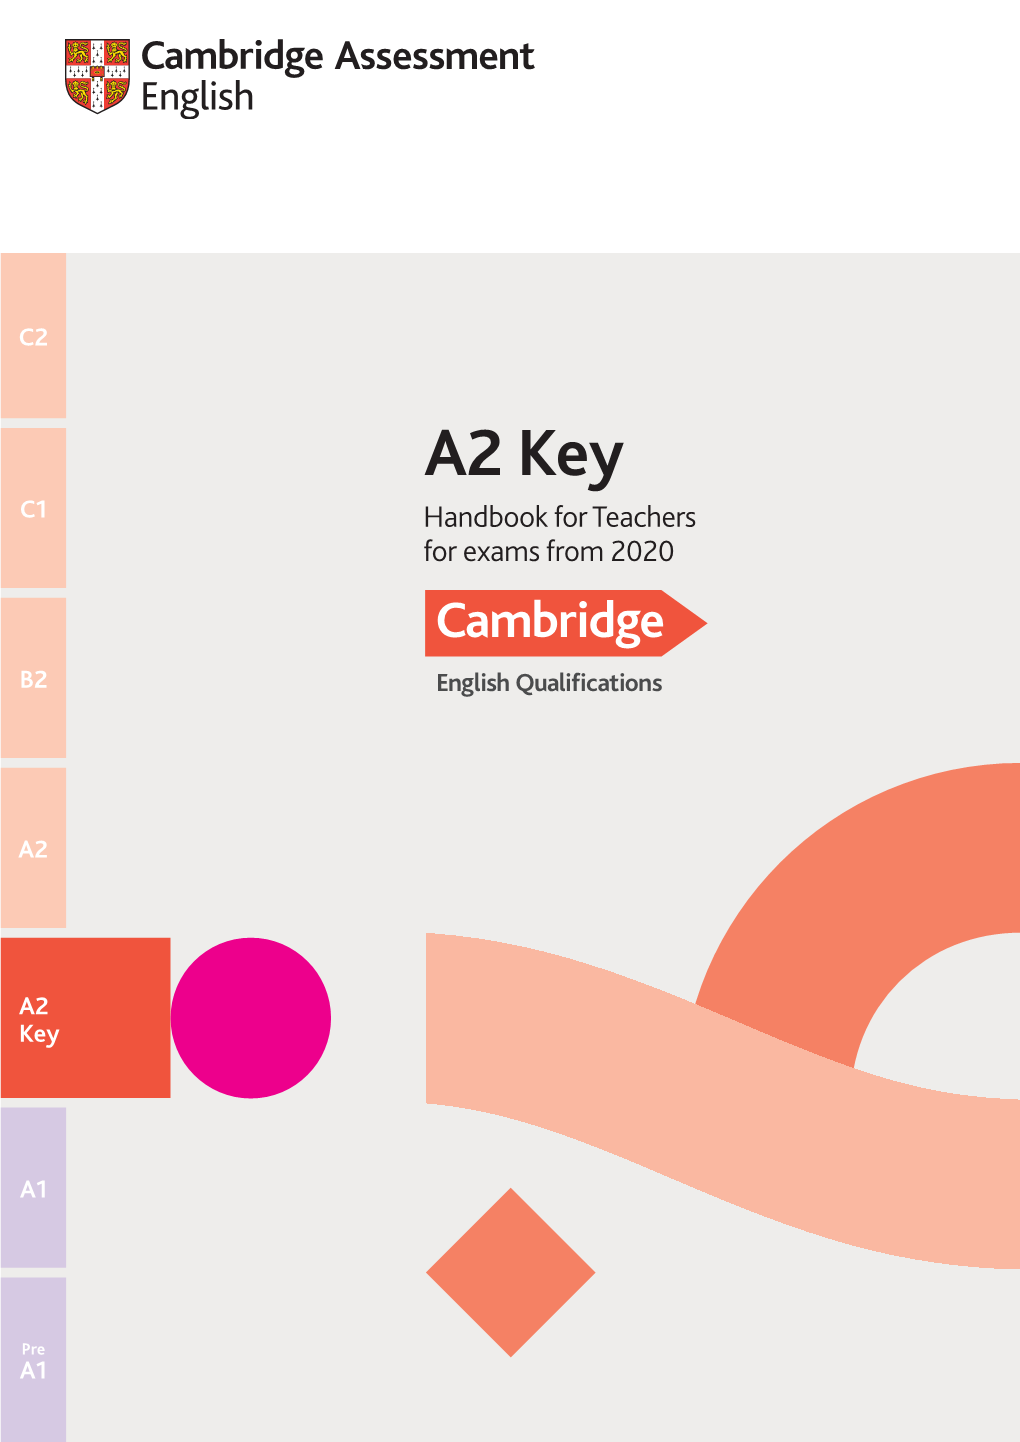 A2 Key Handbook for Teachers Handbook Teachers for Exams from for 2020